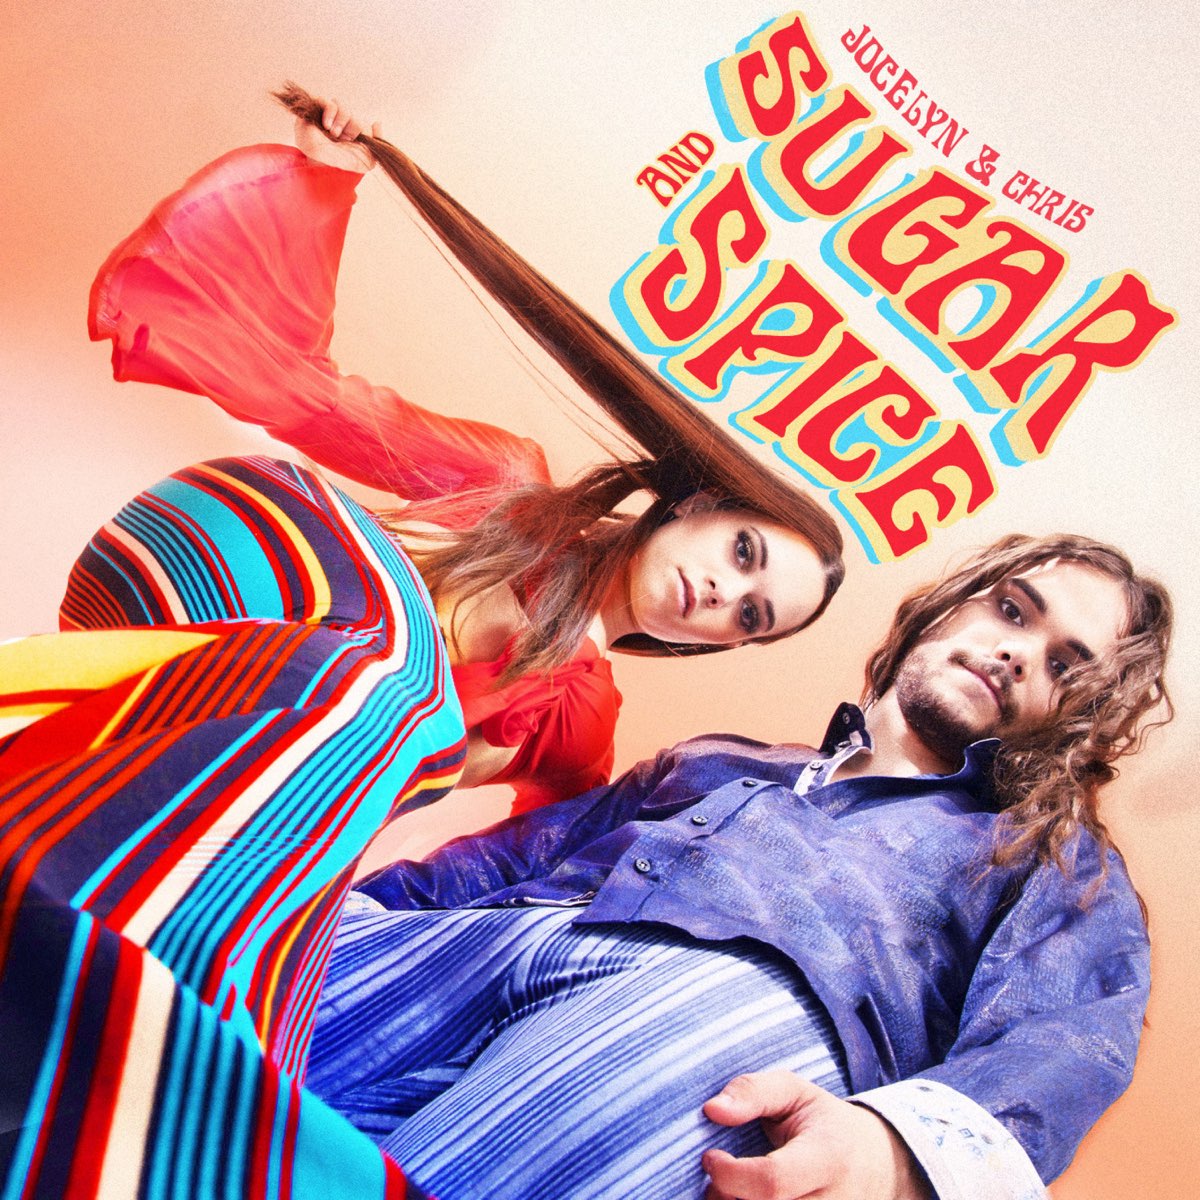 Jocelyn & Chris Arndt. Sugar песня. Chacha and the Monsters альбом Sugar & Spice 2013 список песен.